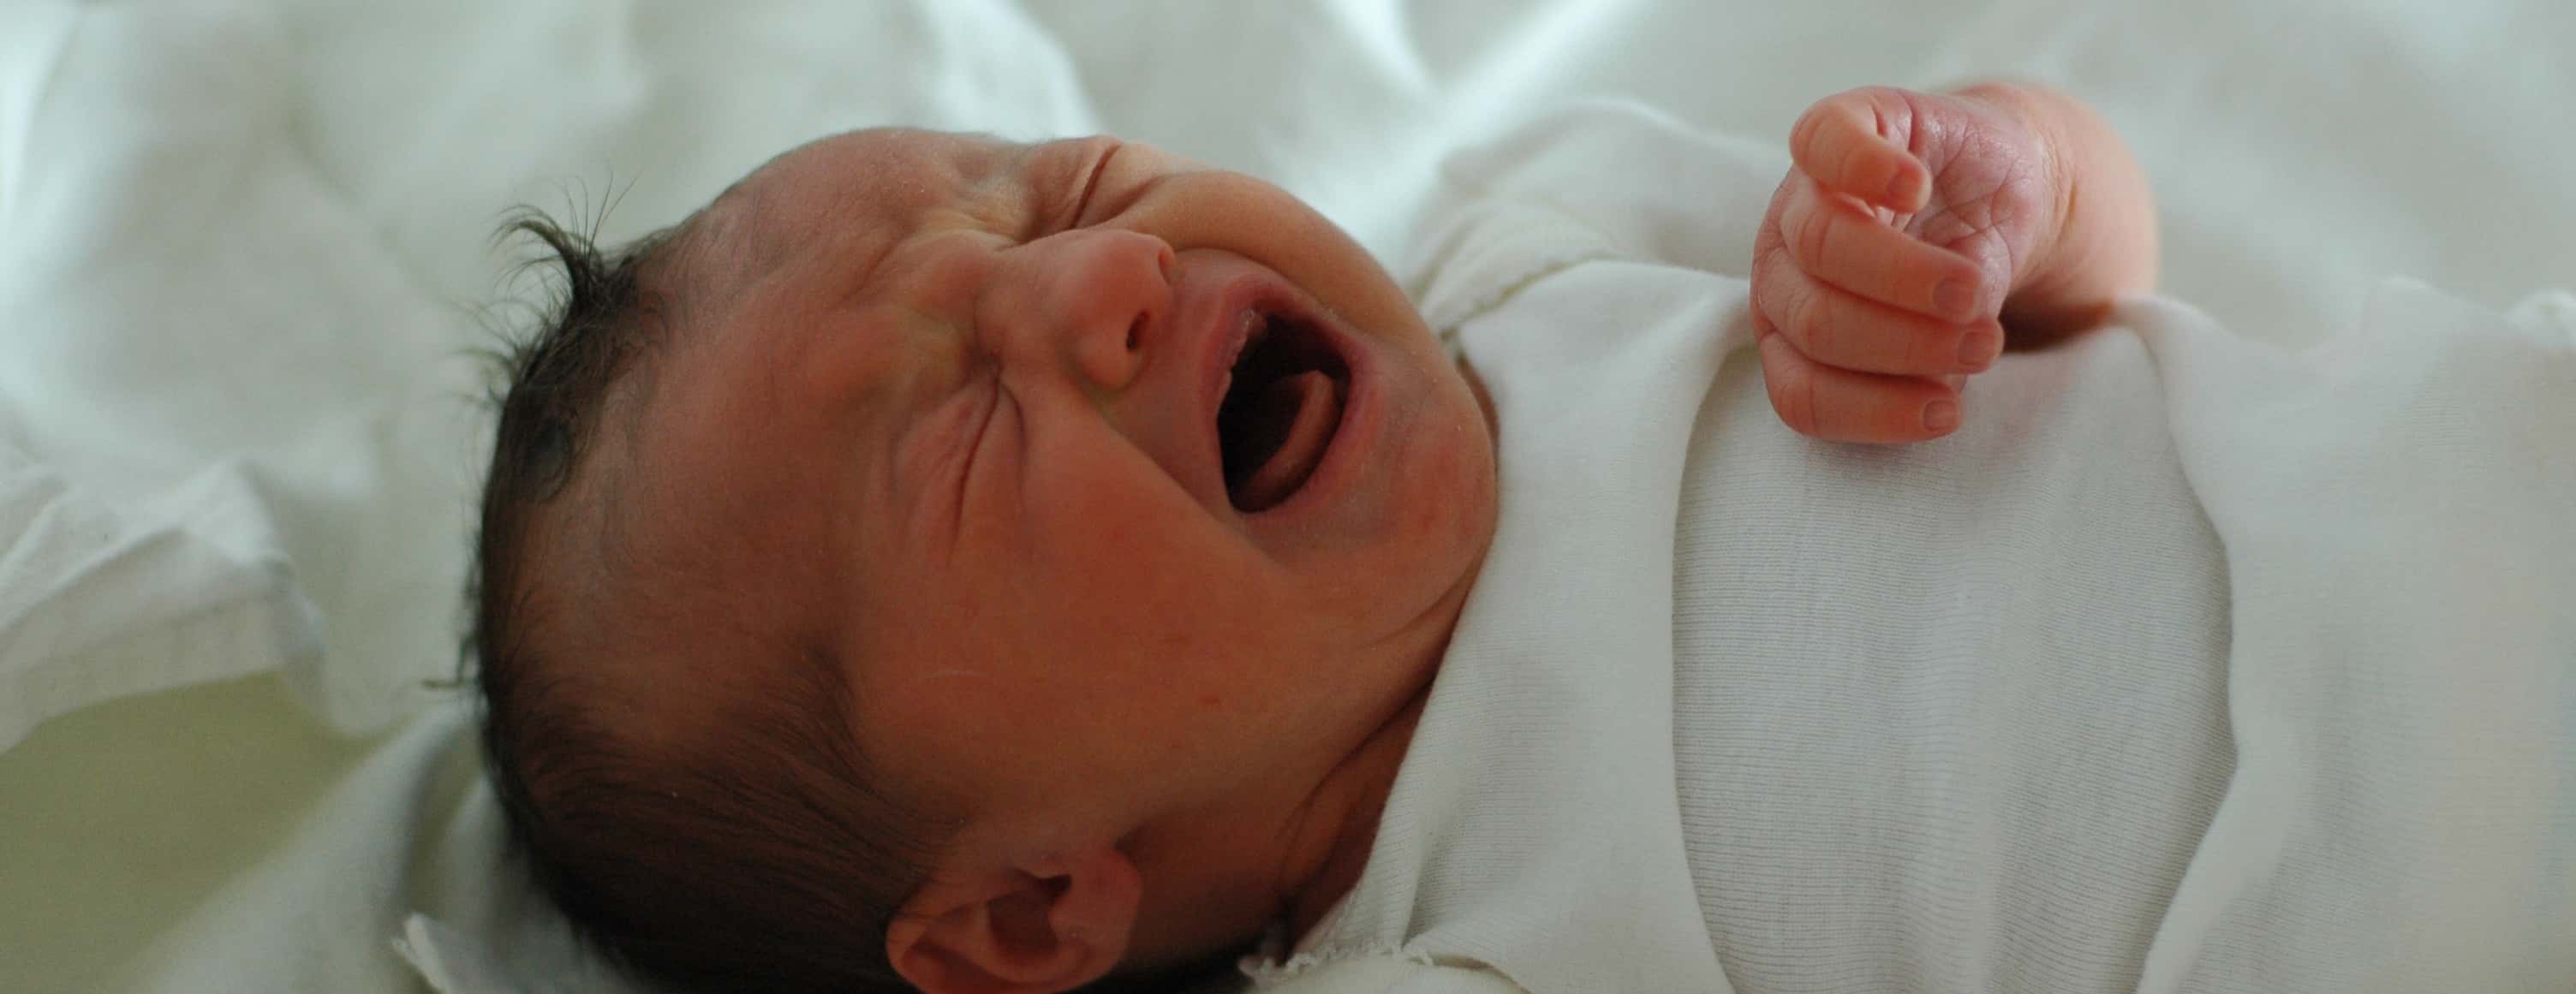 crying_newborn-cropped-jpg